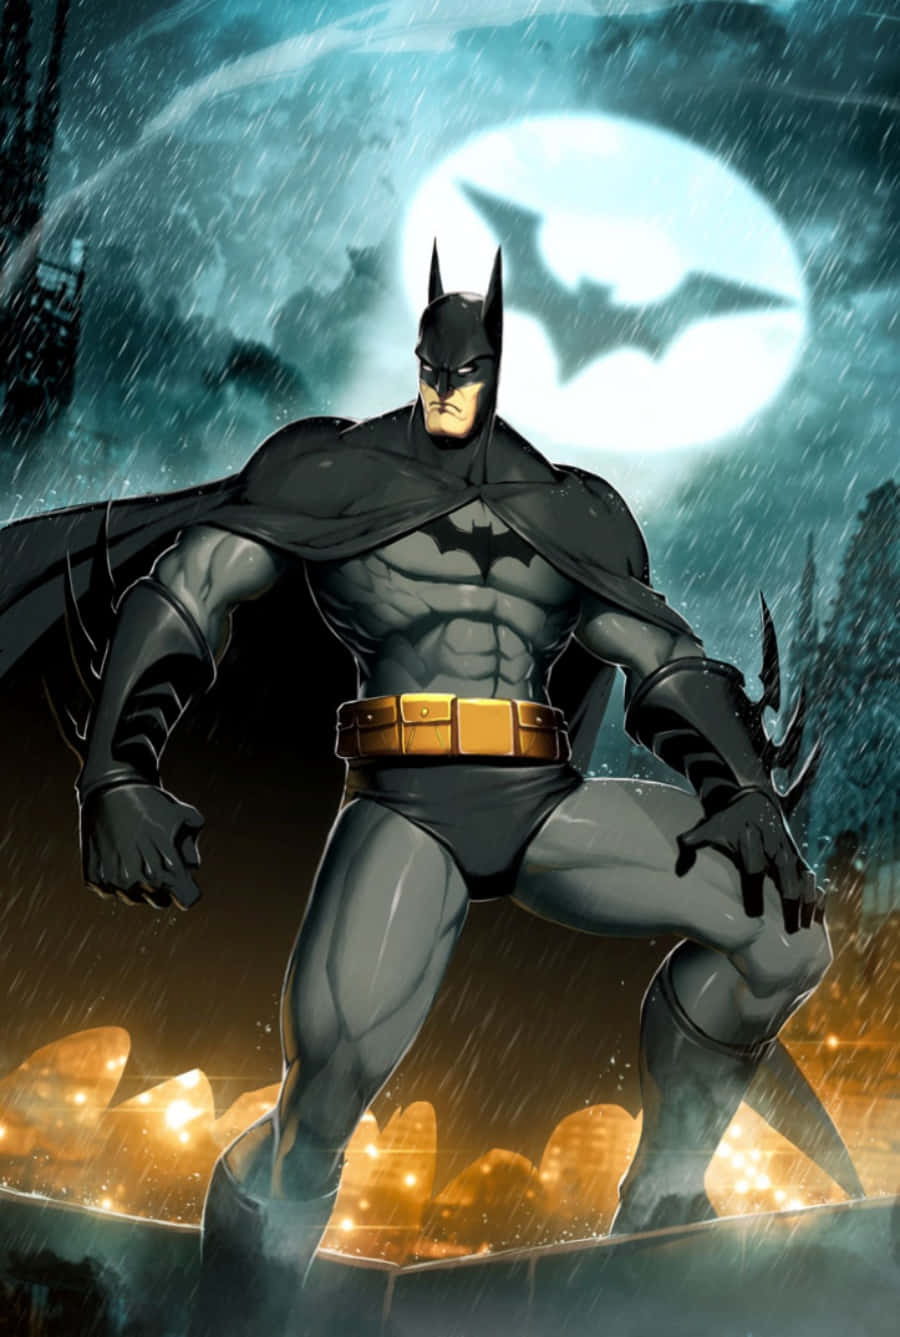 Batman Bat Logo During Rain And Fire Picture